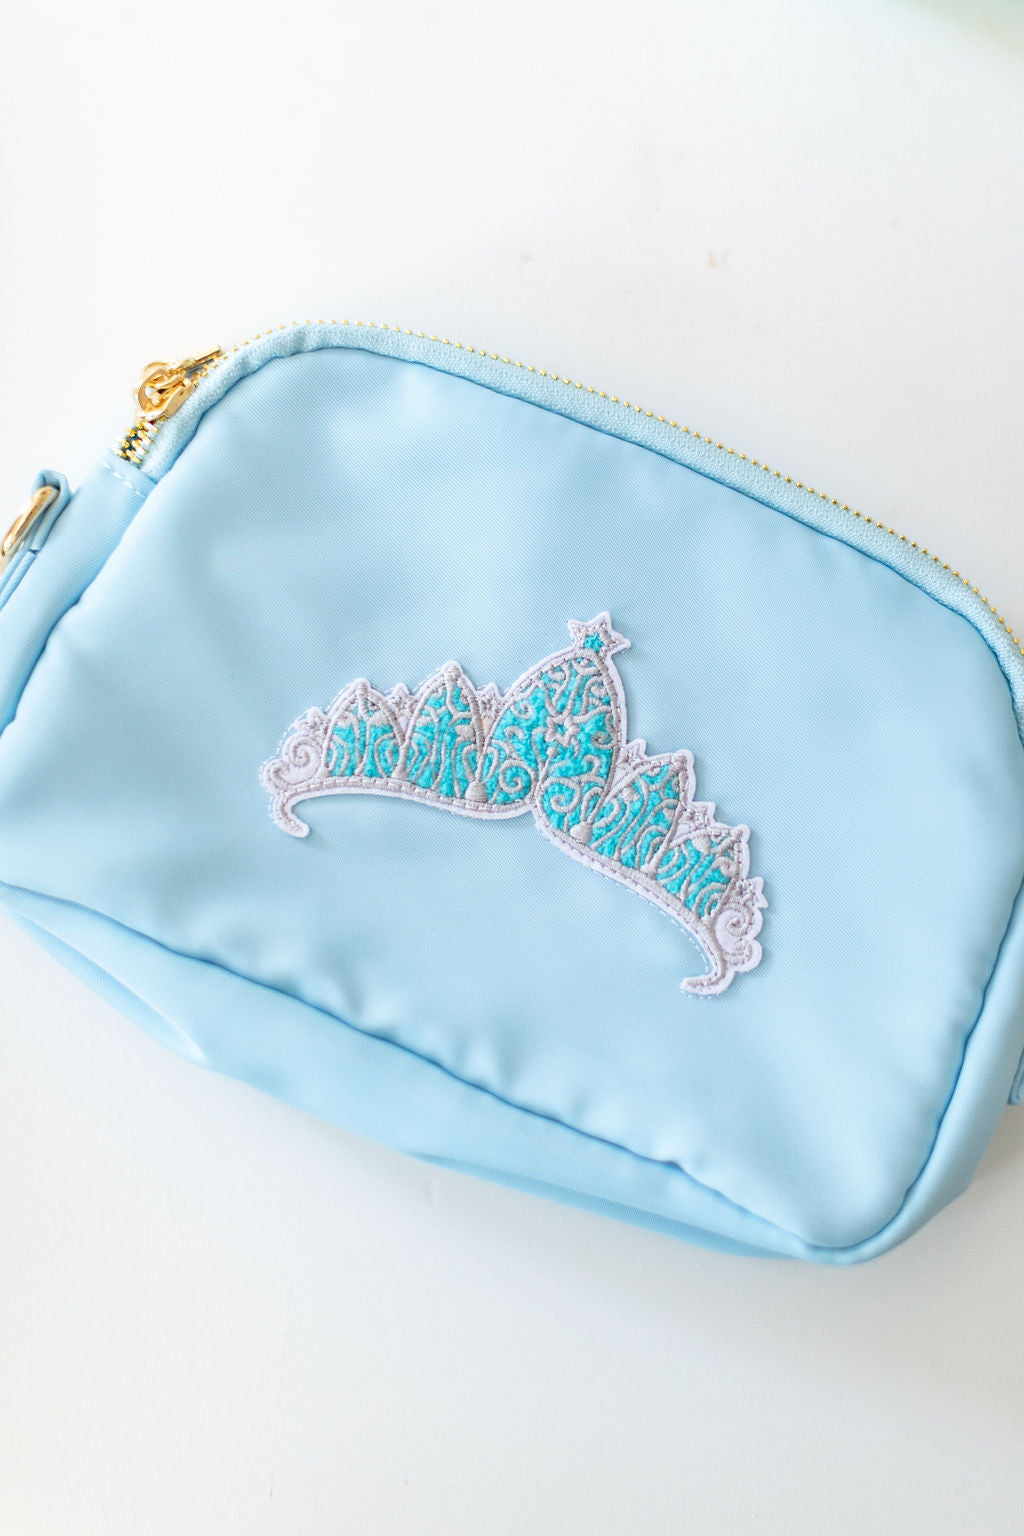 Disney Princess Bag Kids Backpack Girls Pink Bag School Outdoor Travel Book  Bag | eBay